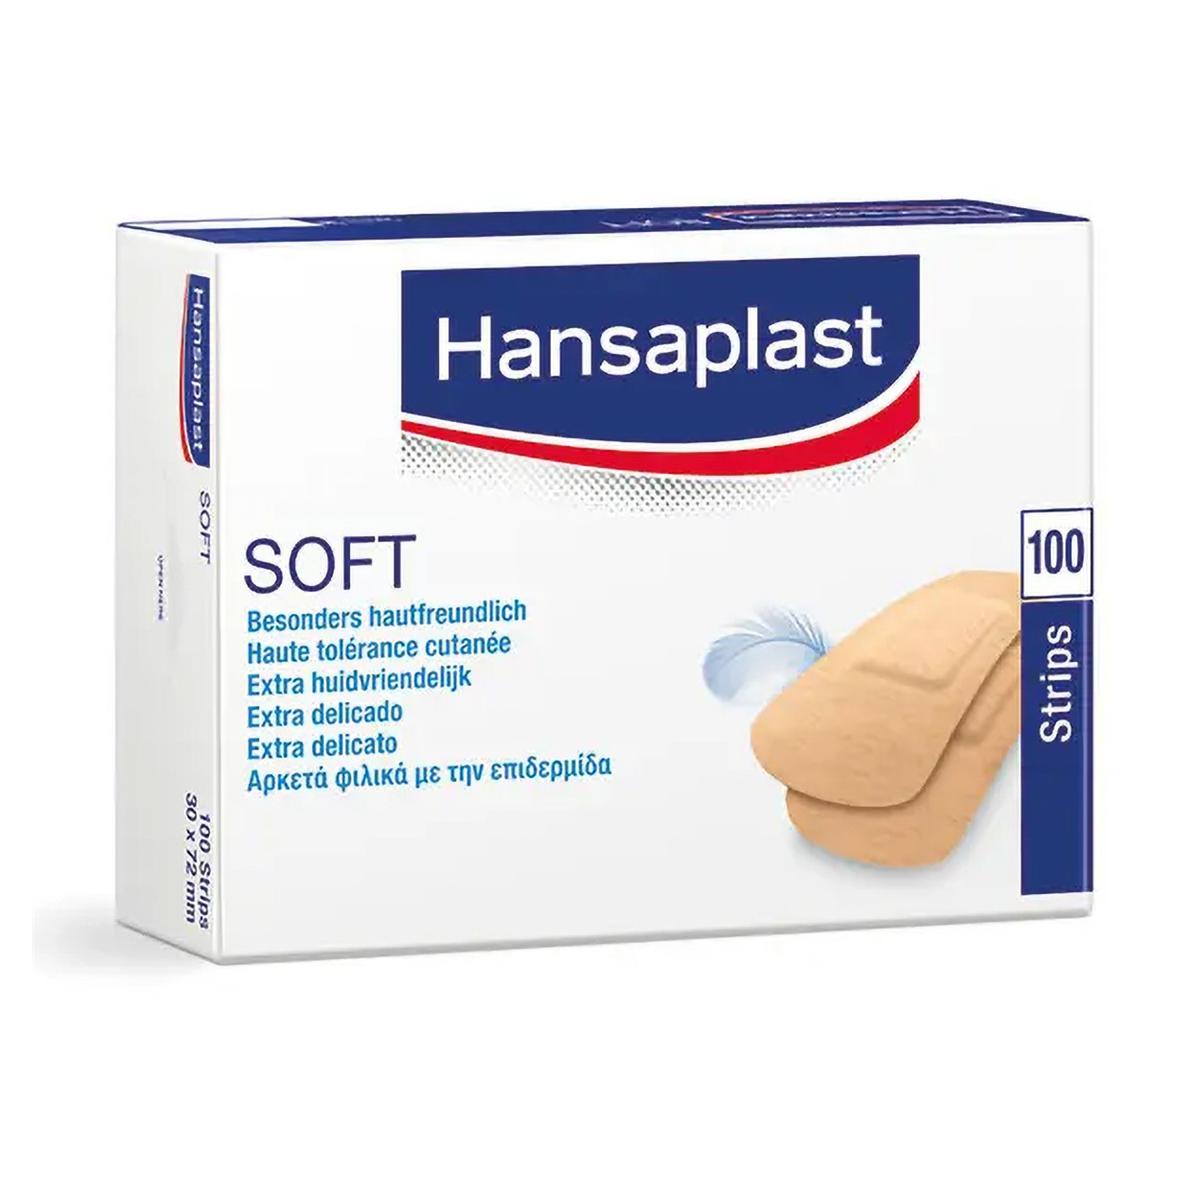 Hansaplast soft wondpleister - 30 x 72 mm, 100 stuks